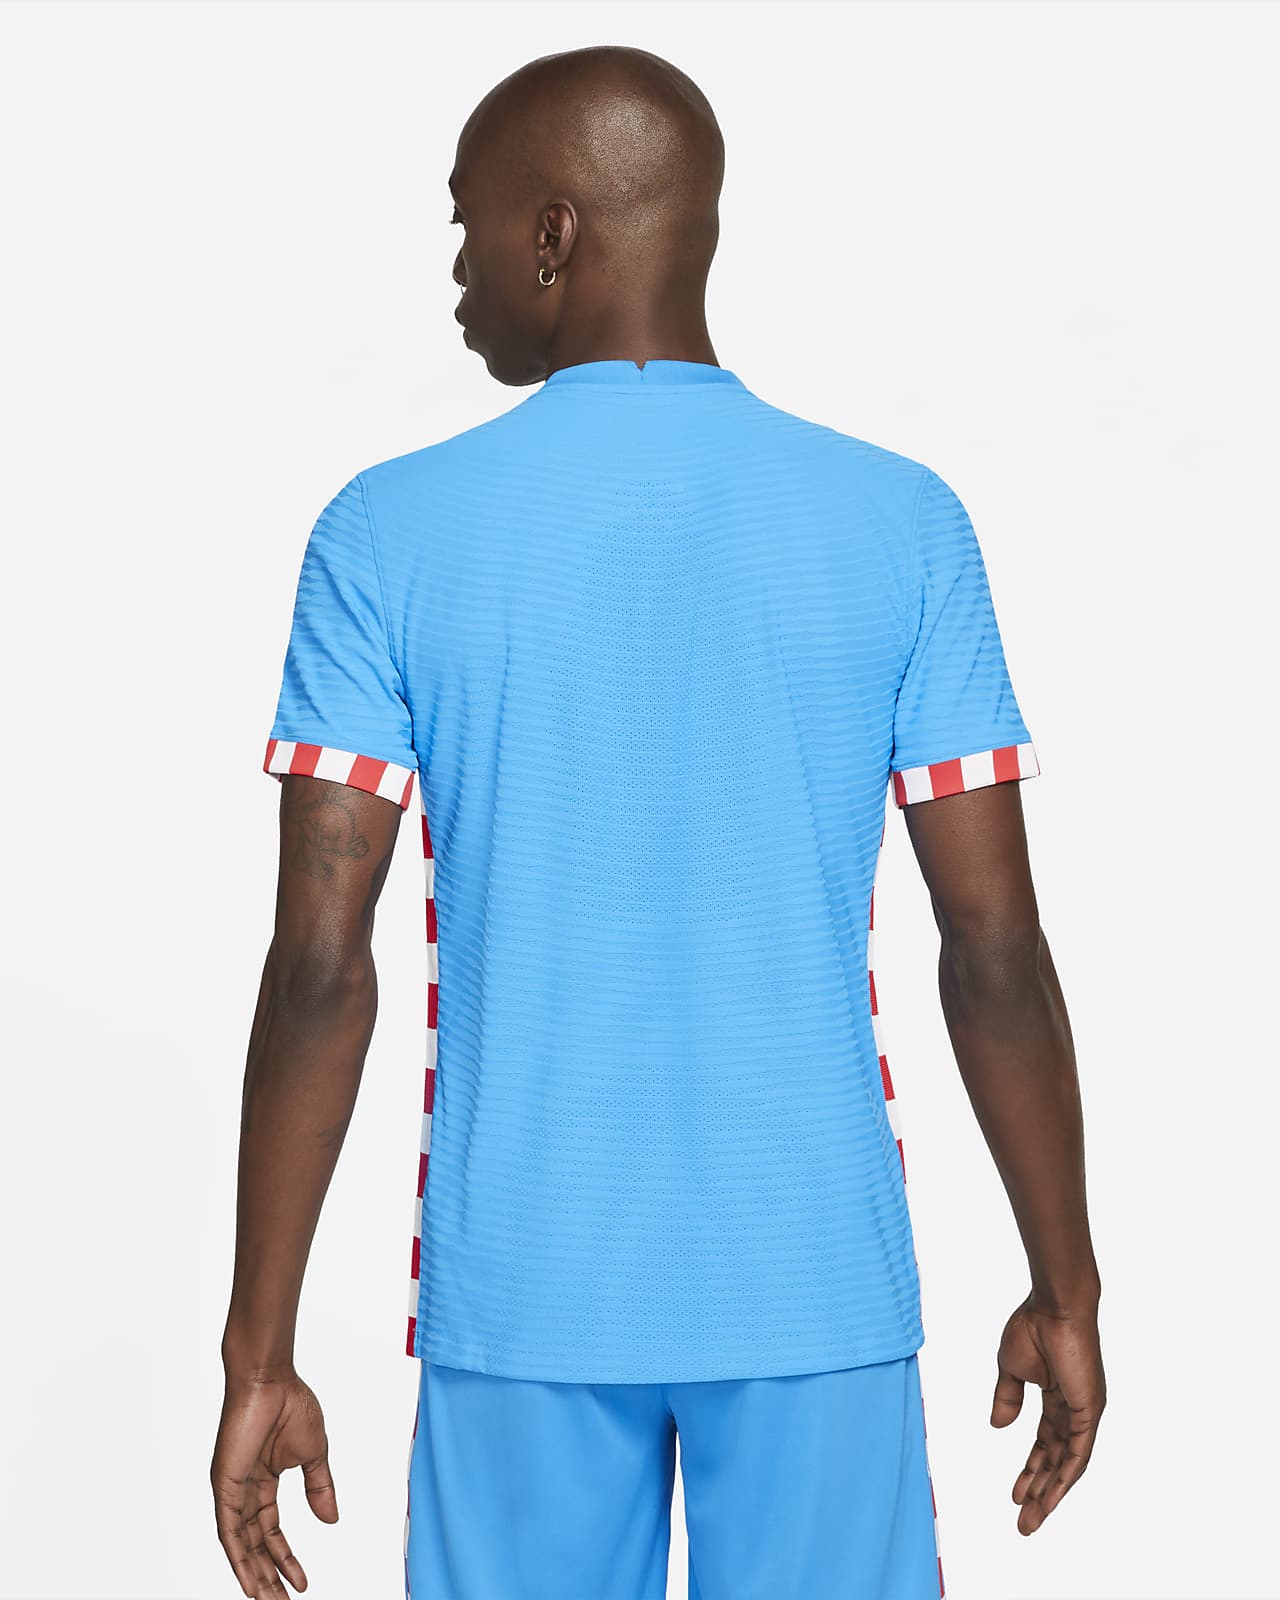 Atlético Madrid 2021/22 Match Men's Nike Dri-FIT ADV Football Shirt